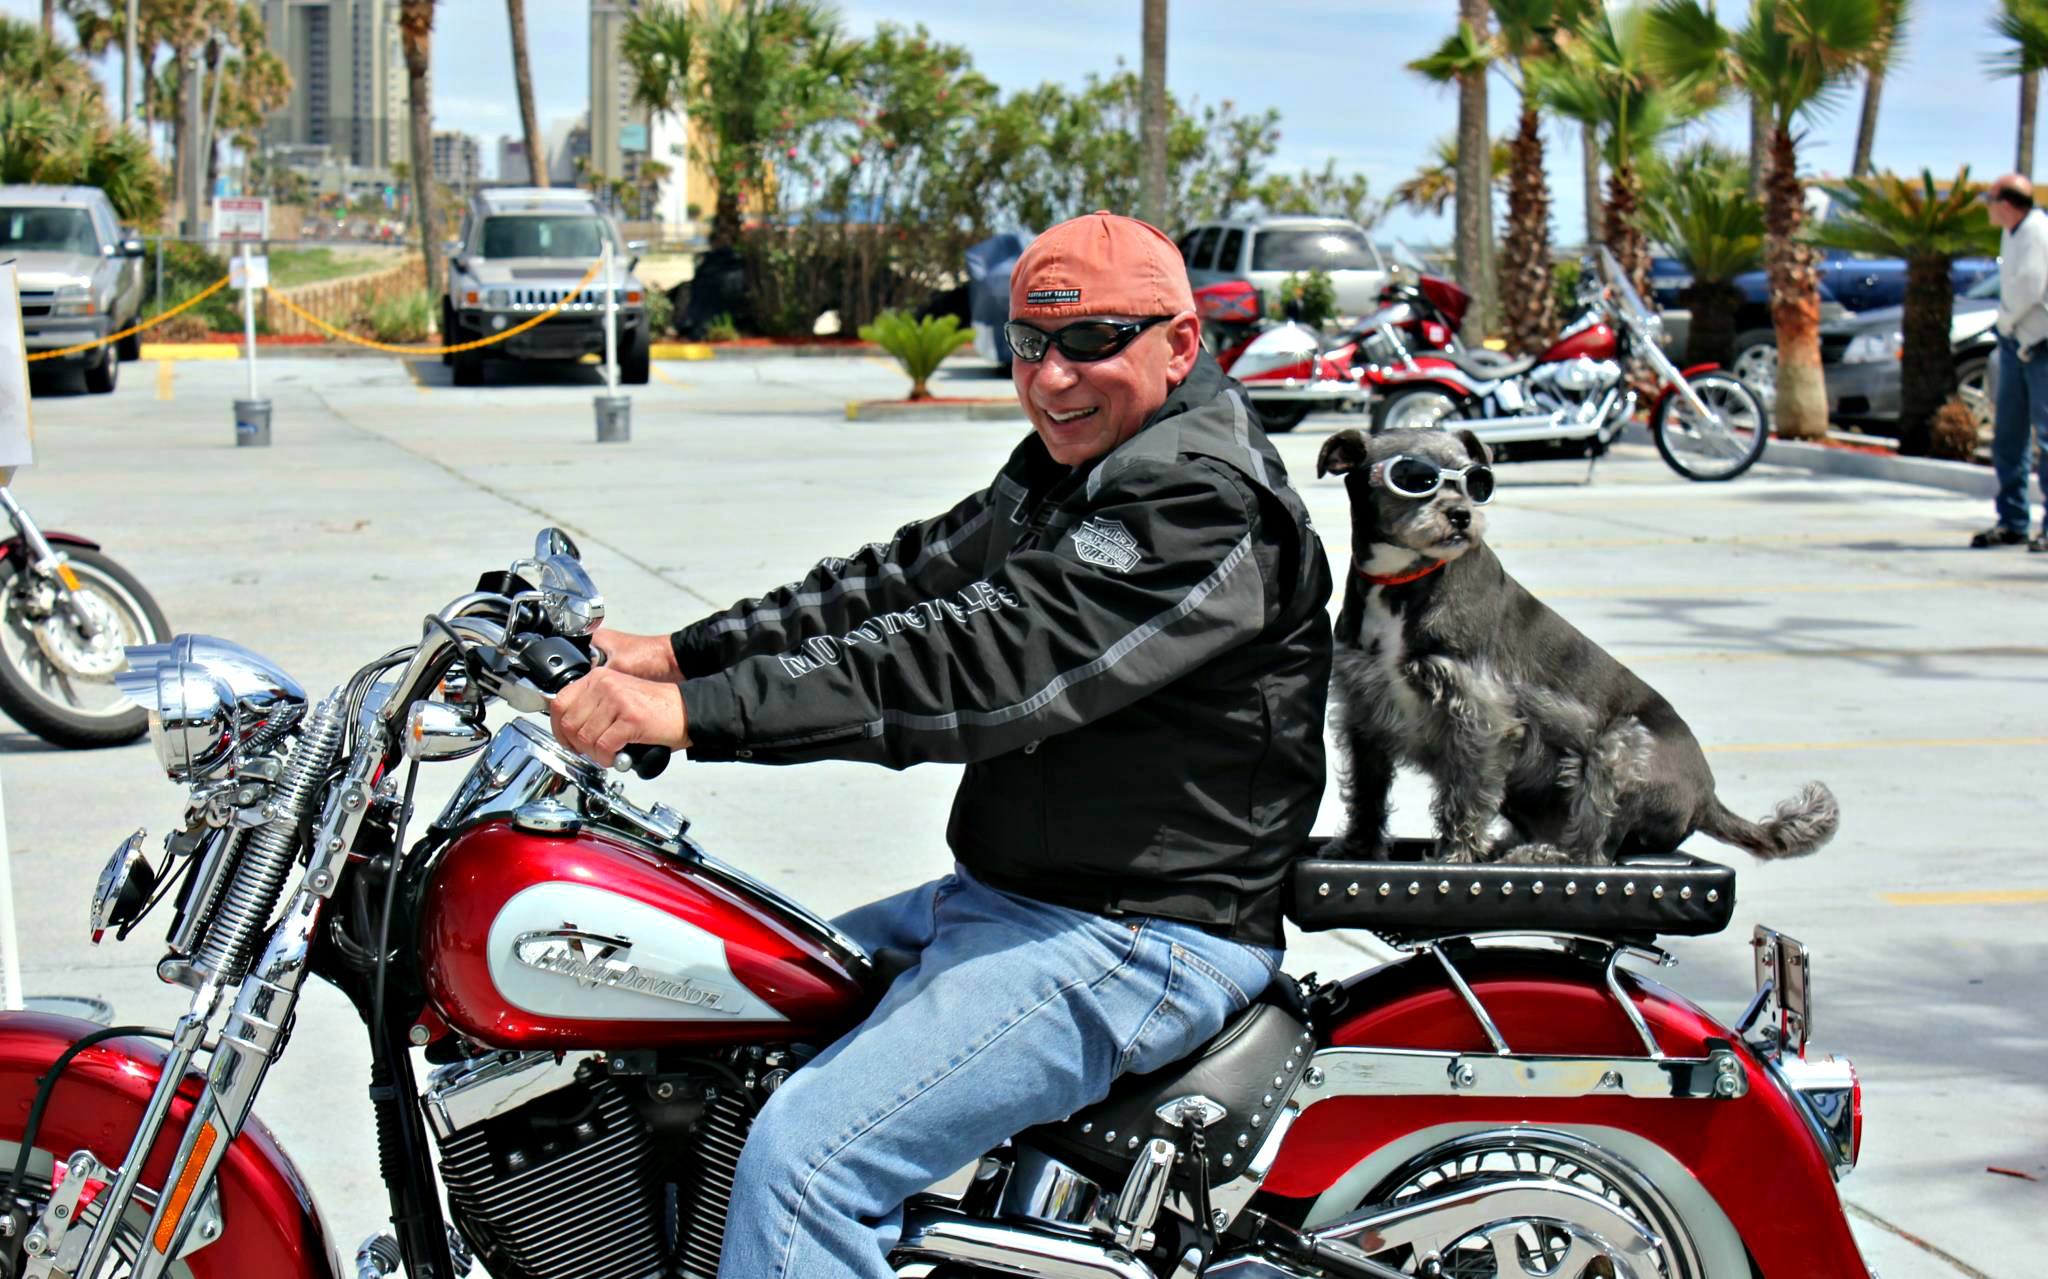 Thunder Beach motorcyle rally biker and his dog in Panama City Beach, Florida